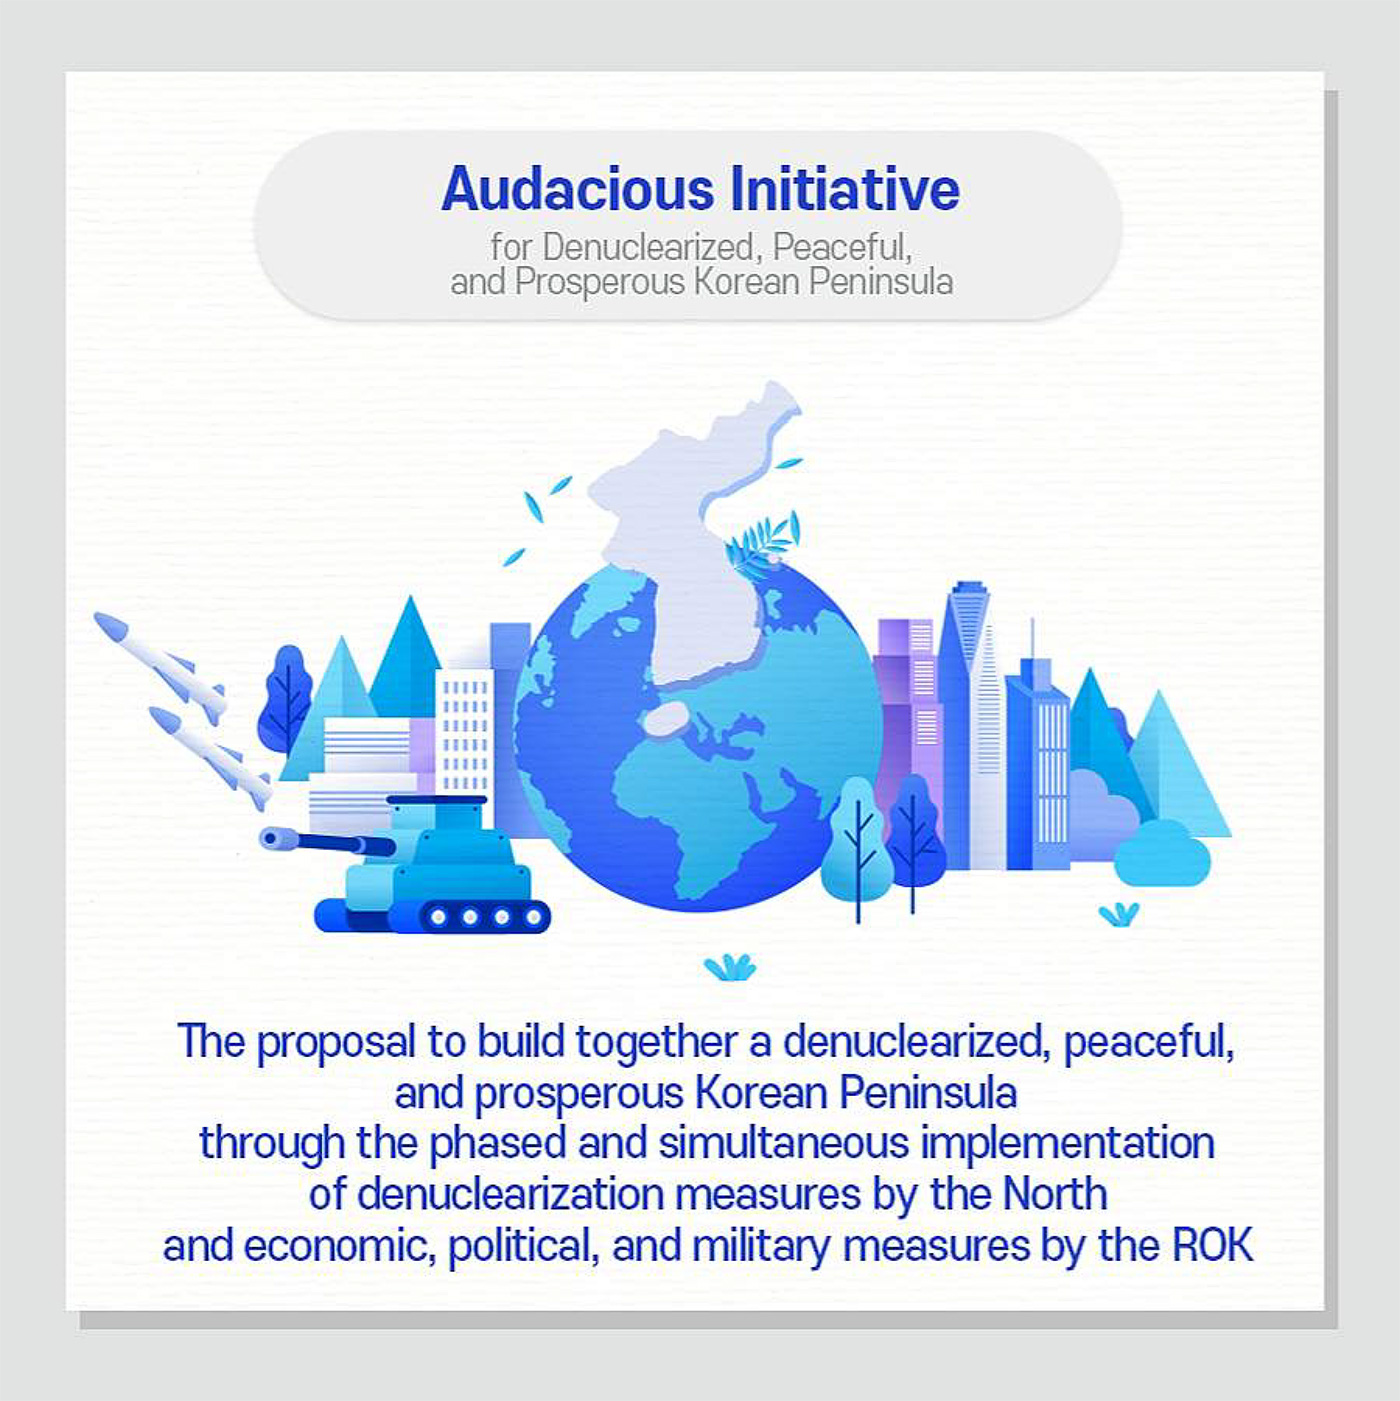 Audacious Initiative for Denuclearized, Peaceful, and Prosperous Korean Peninsula03